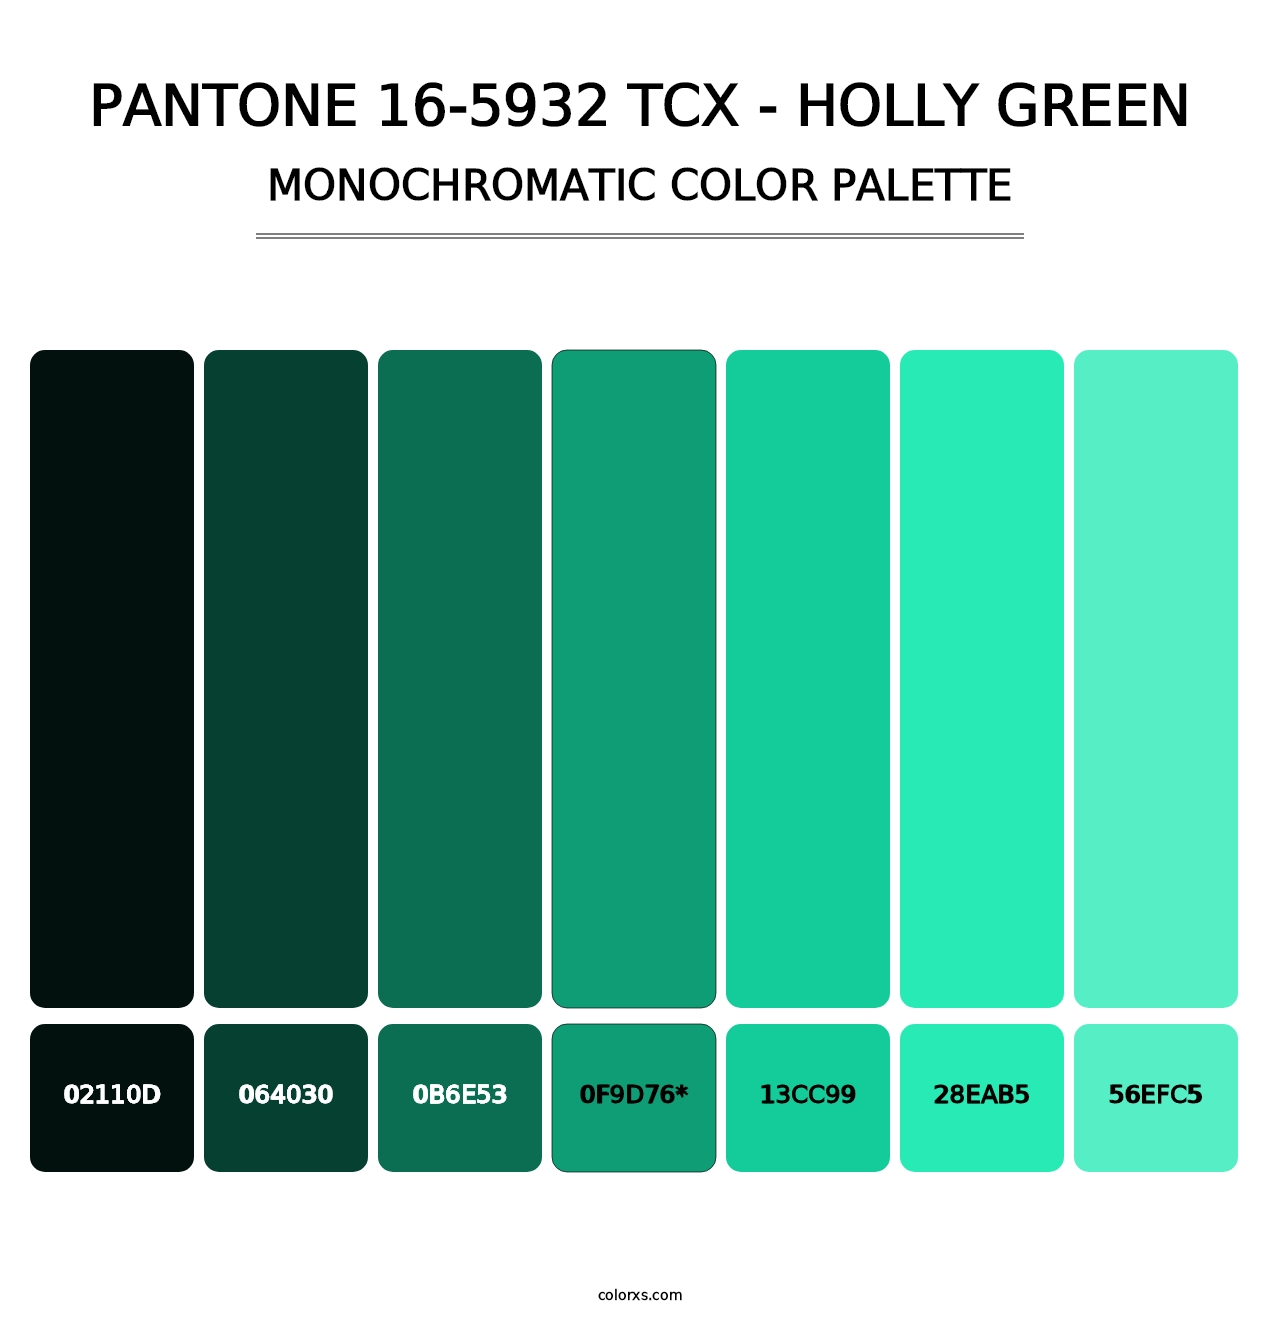 PANTONE 16-5932 TCX - Holly Green - Monochromatic Color Palette